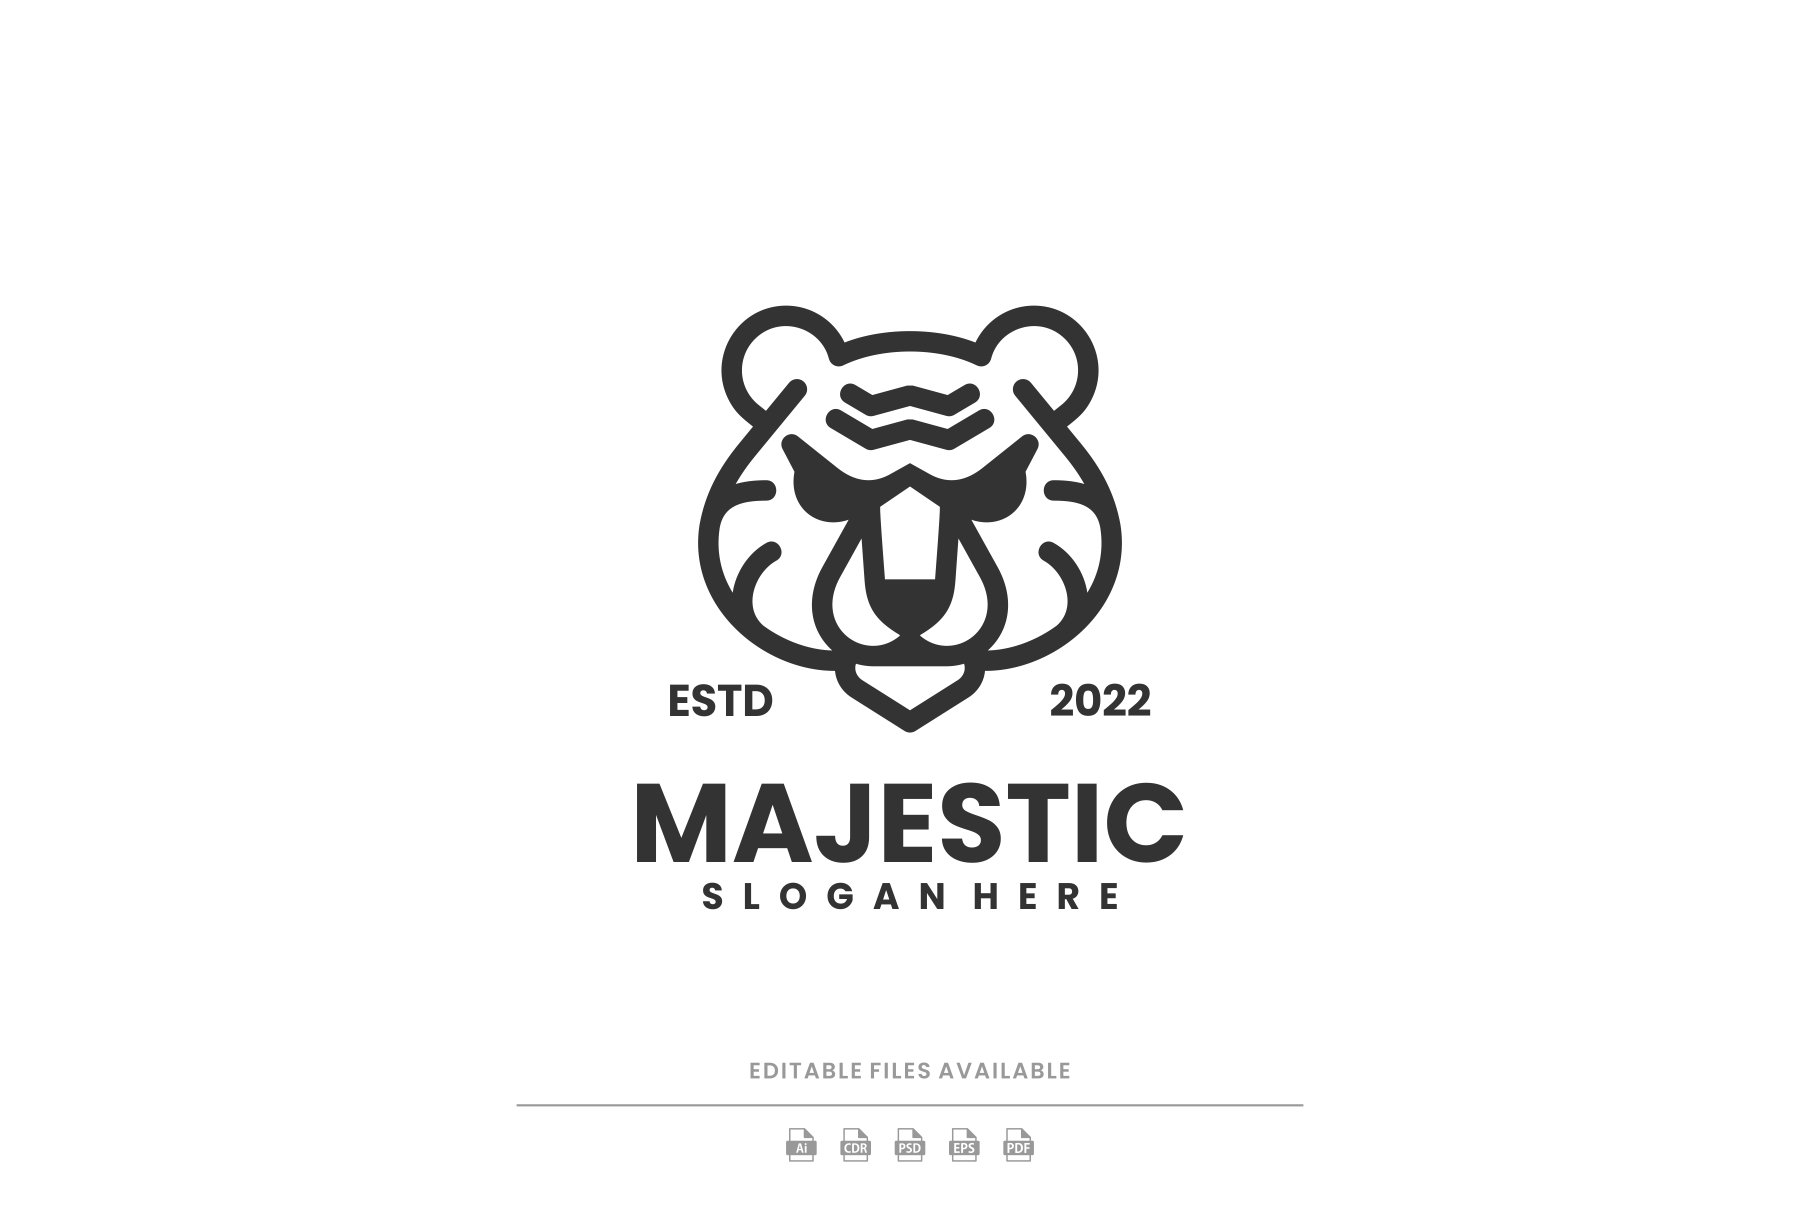 Majestic Tiger Line Art Logo cover image.